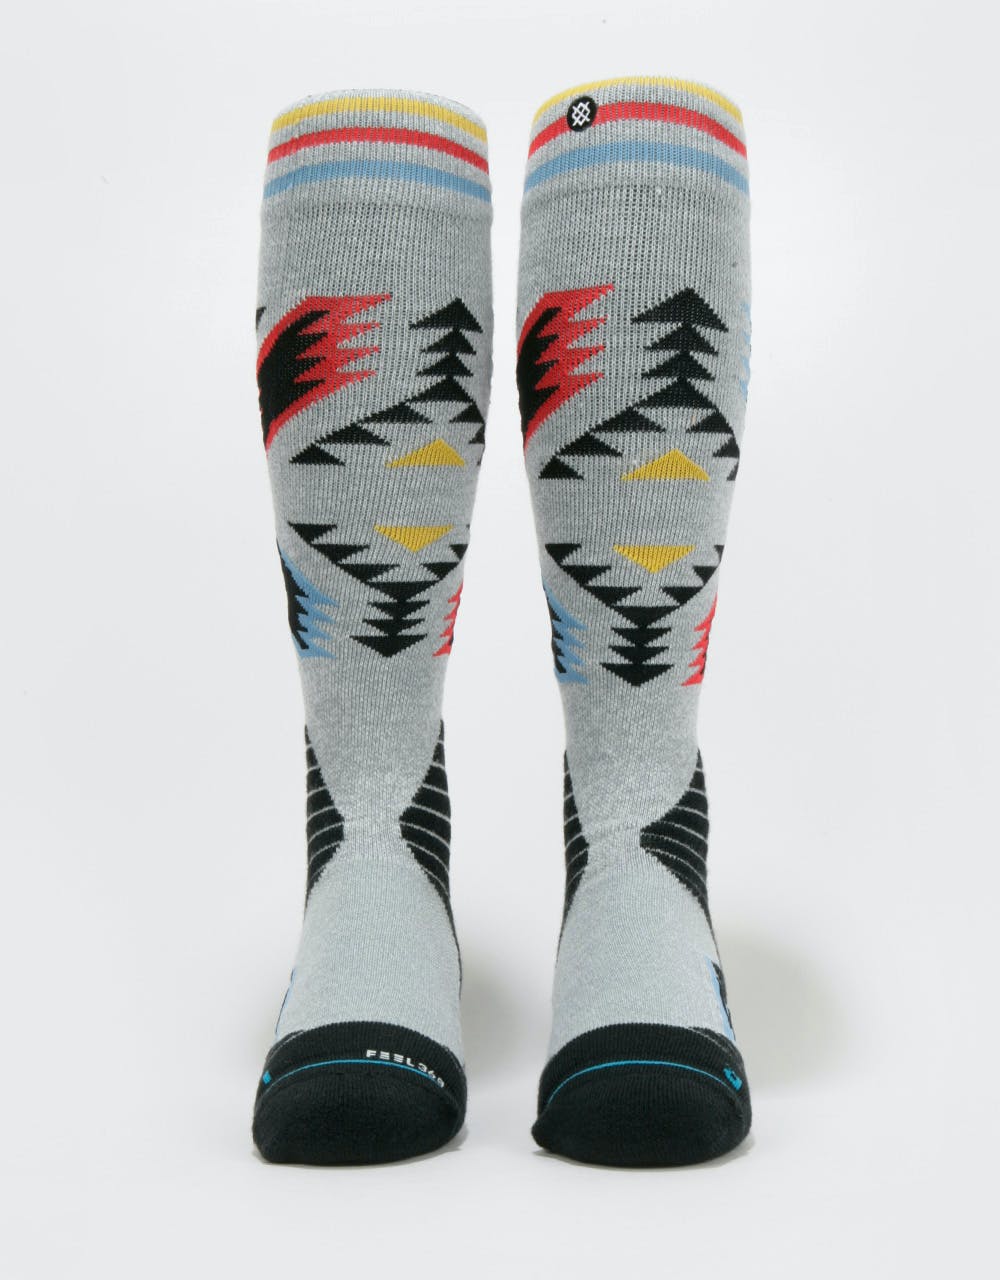 Stance Gonzaga Park Snowboard Socks - Grey